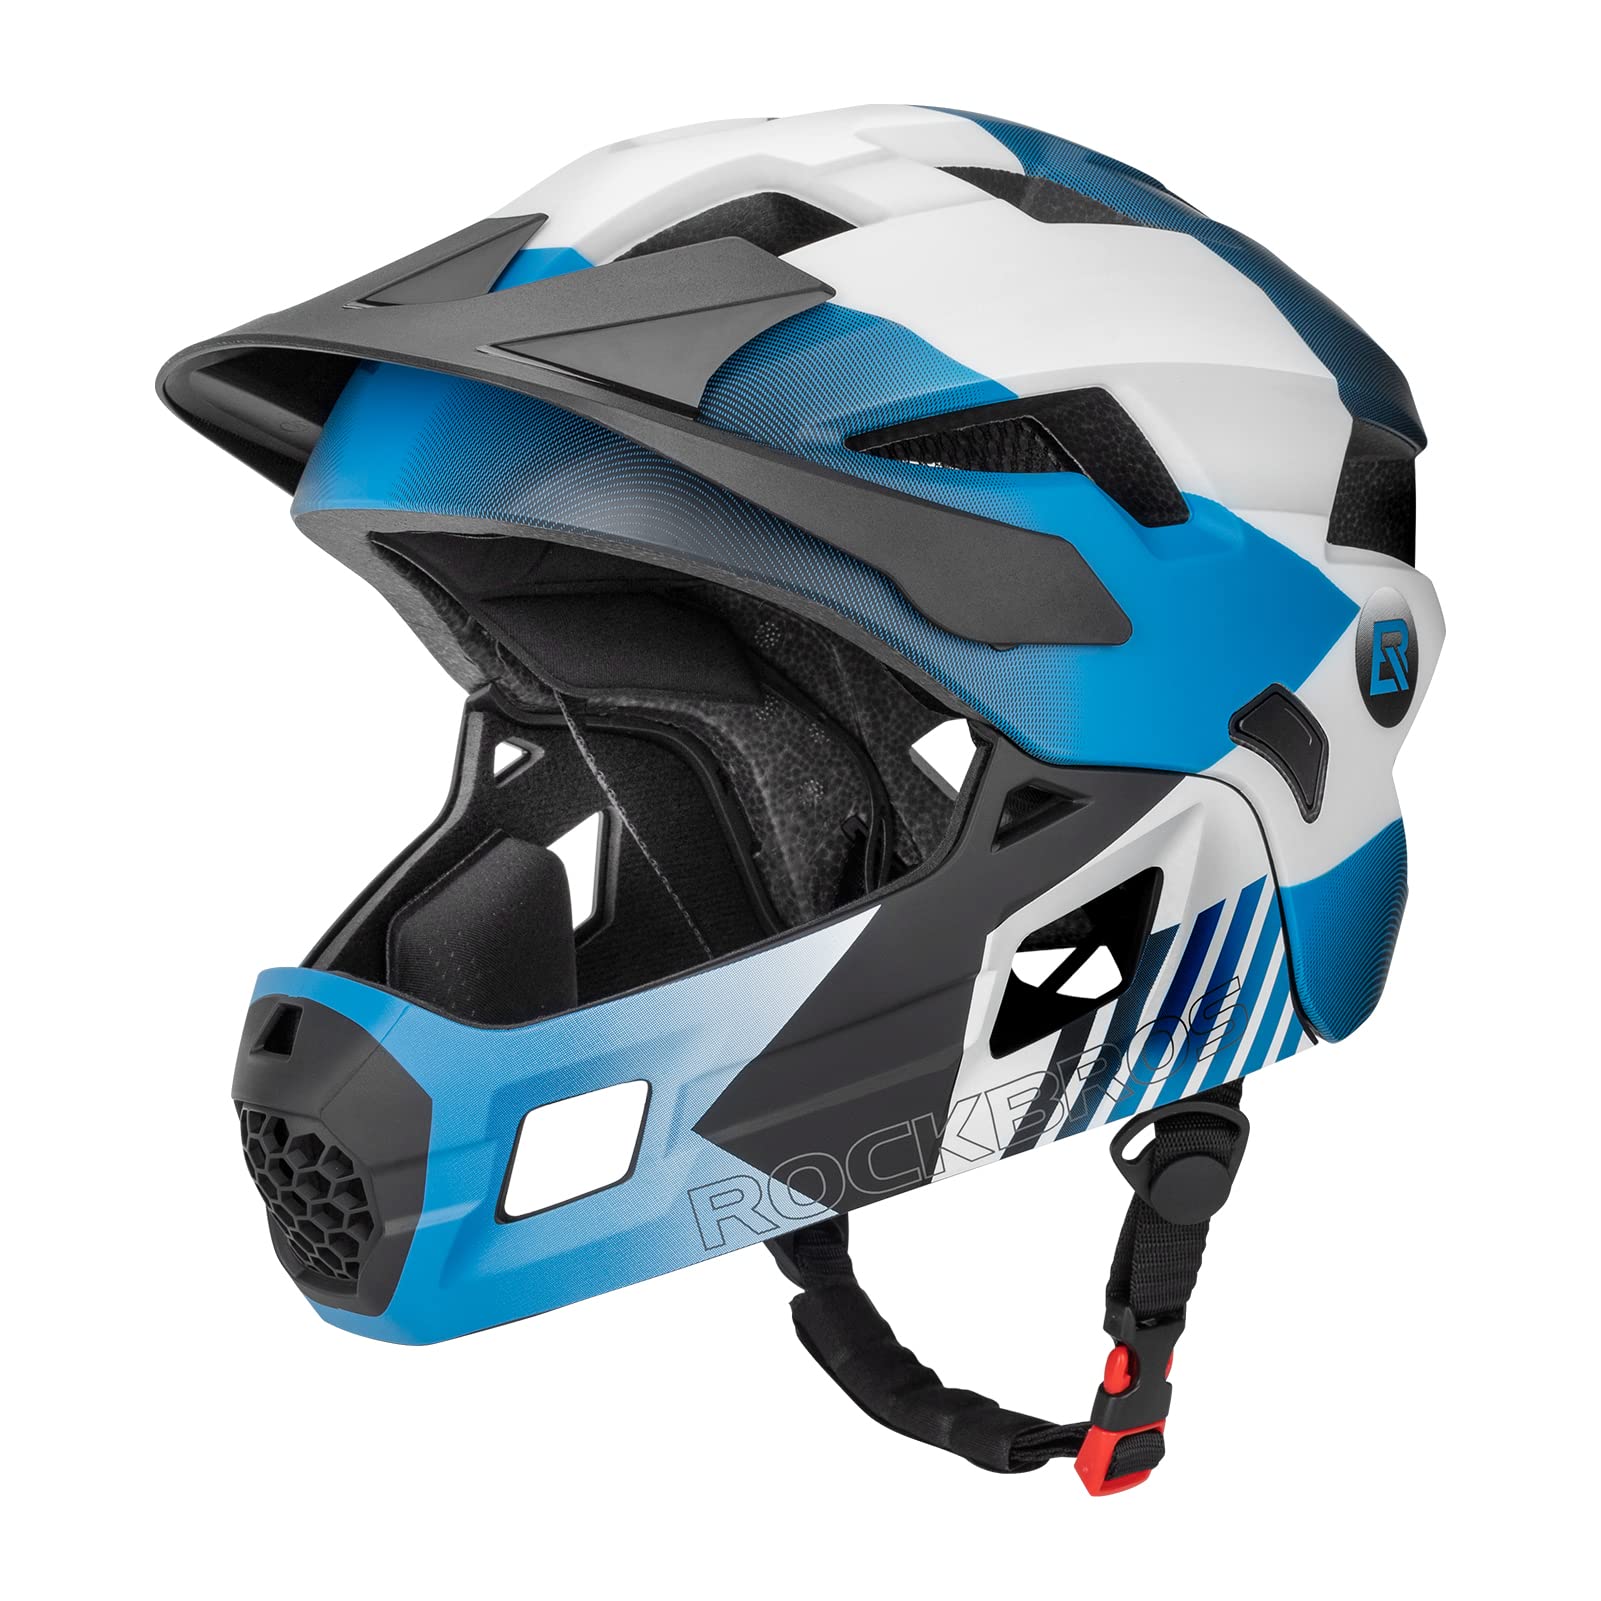 ROCKBROS Kids Helmet Safety Full Face Helmet for BMX MTB & Skateboard #Color_Blue